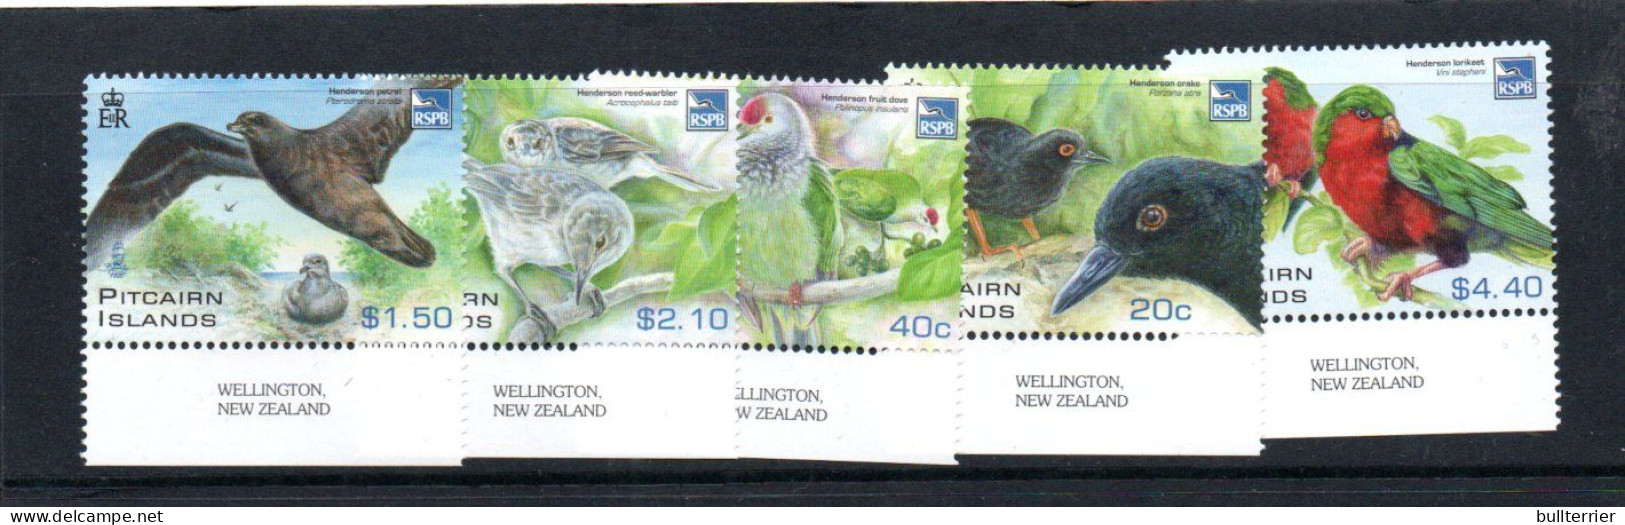 BIRDS -Pitcairn Islands - 2011- Henderson IslandRSPB Birds Set Of 5 Mint Never Hinged, SG Cat £15.25 - Columbiformes